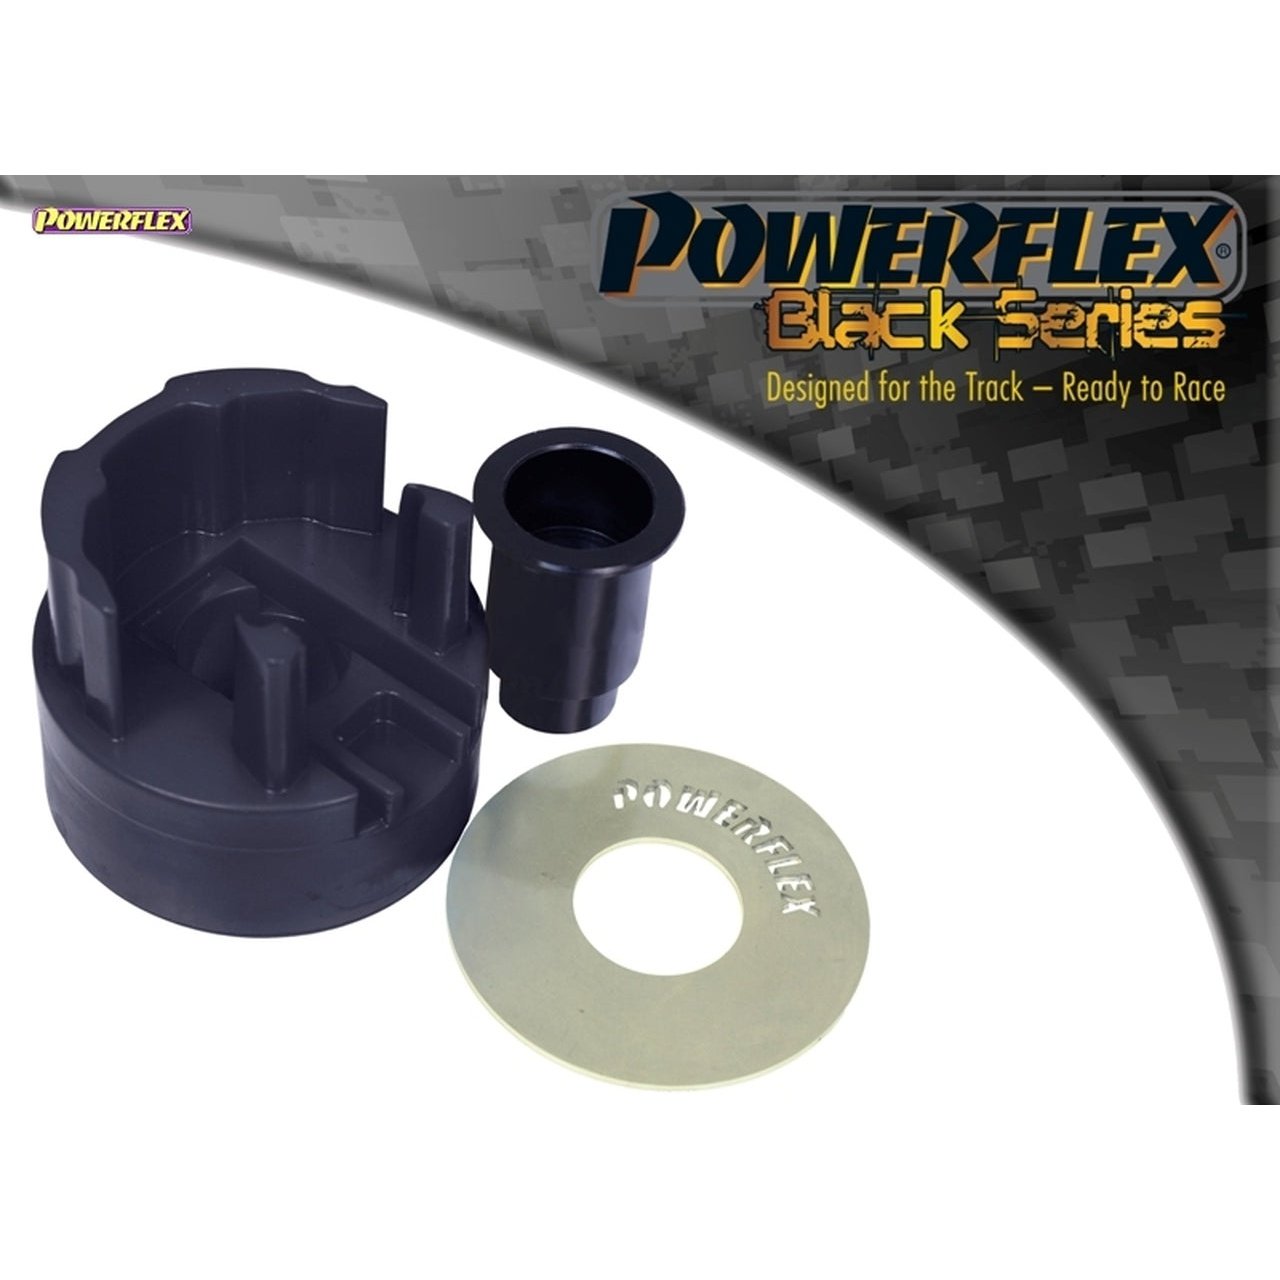 Powerflex Black ignite performancePowerflex Black ignite performance